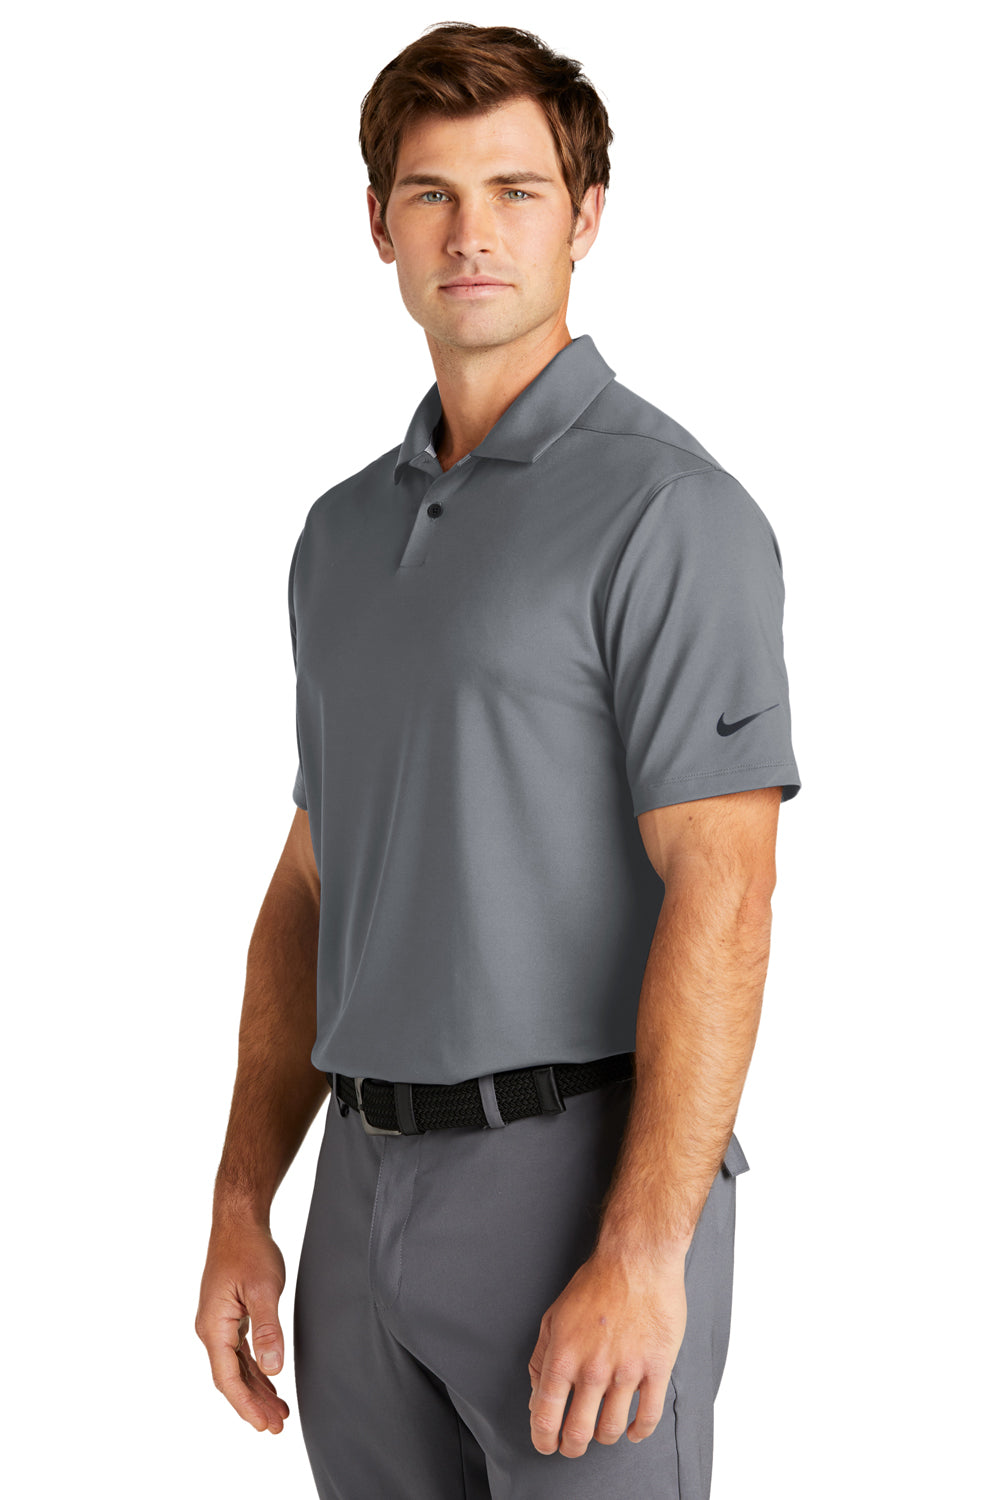 Nike NKDC2108 Mens Vapor Dri-Fit Moisture Wicking Short Sleeve Polo Shirt Cool Grey Model 3Q